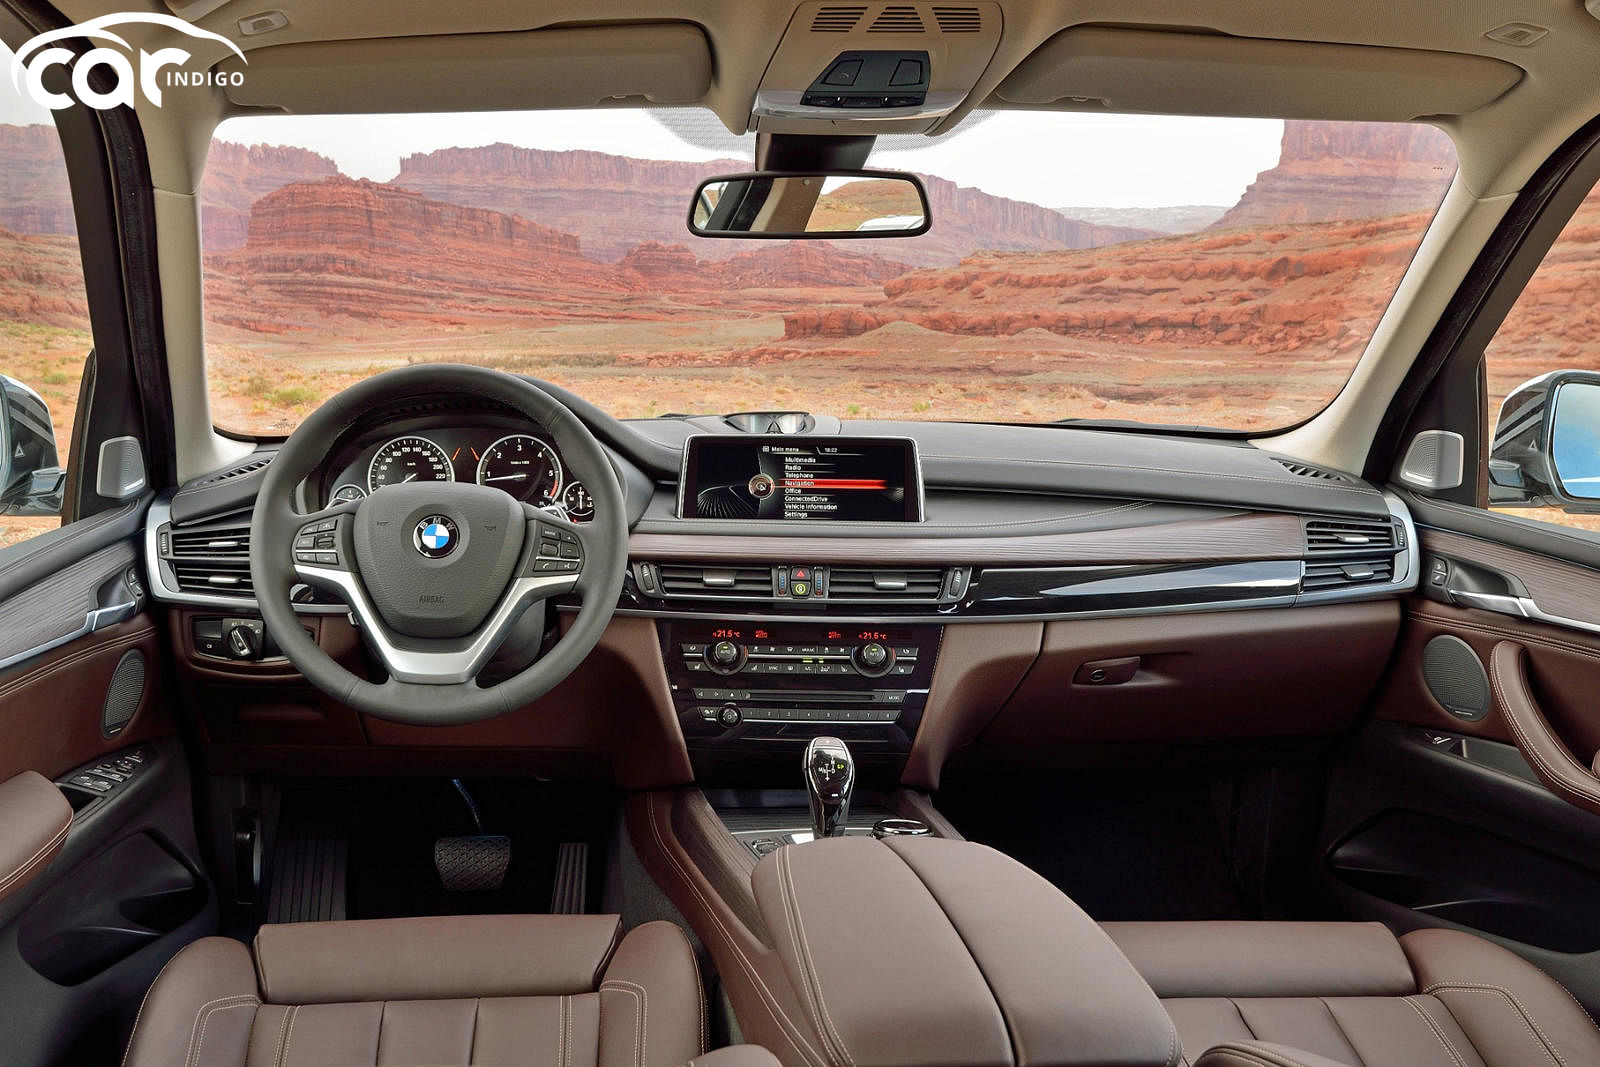 Slightly Mount Vesuvius pellet 2014 BMW X5 Interior Review - Seating, Infotainment, Dashboard and Features  | CarIndigo.com